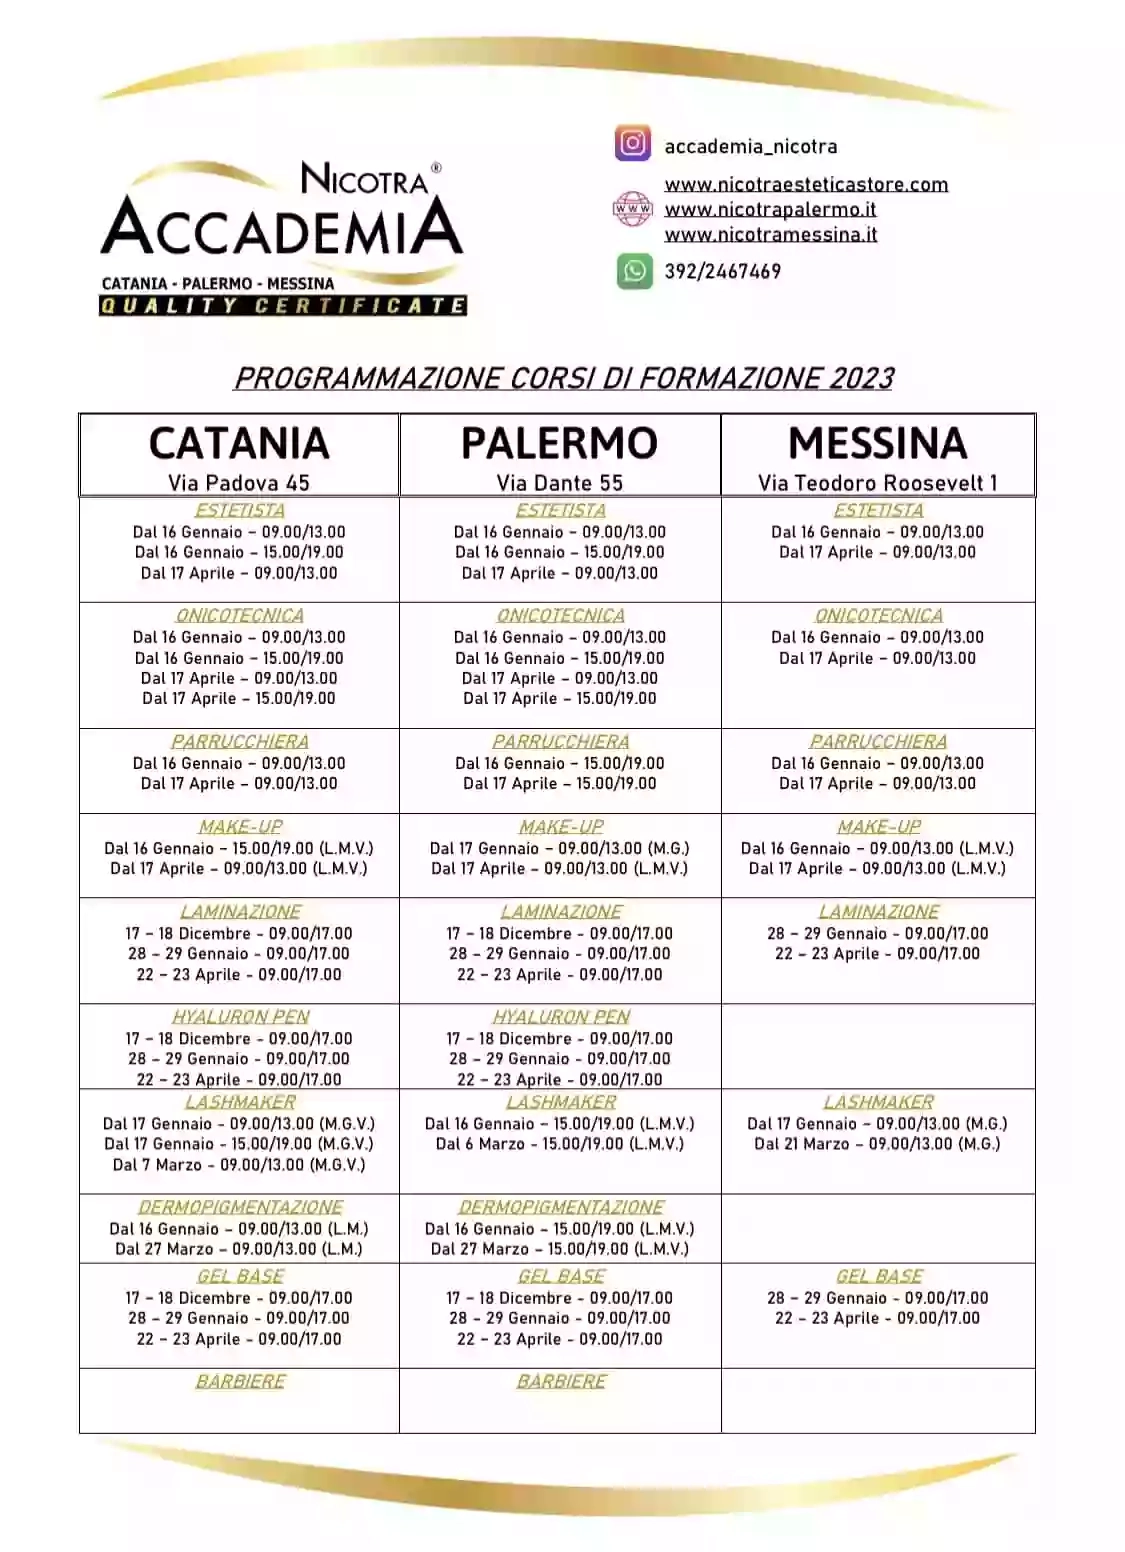 Accademia Nicotra® Palermo